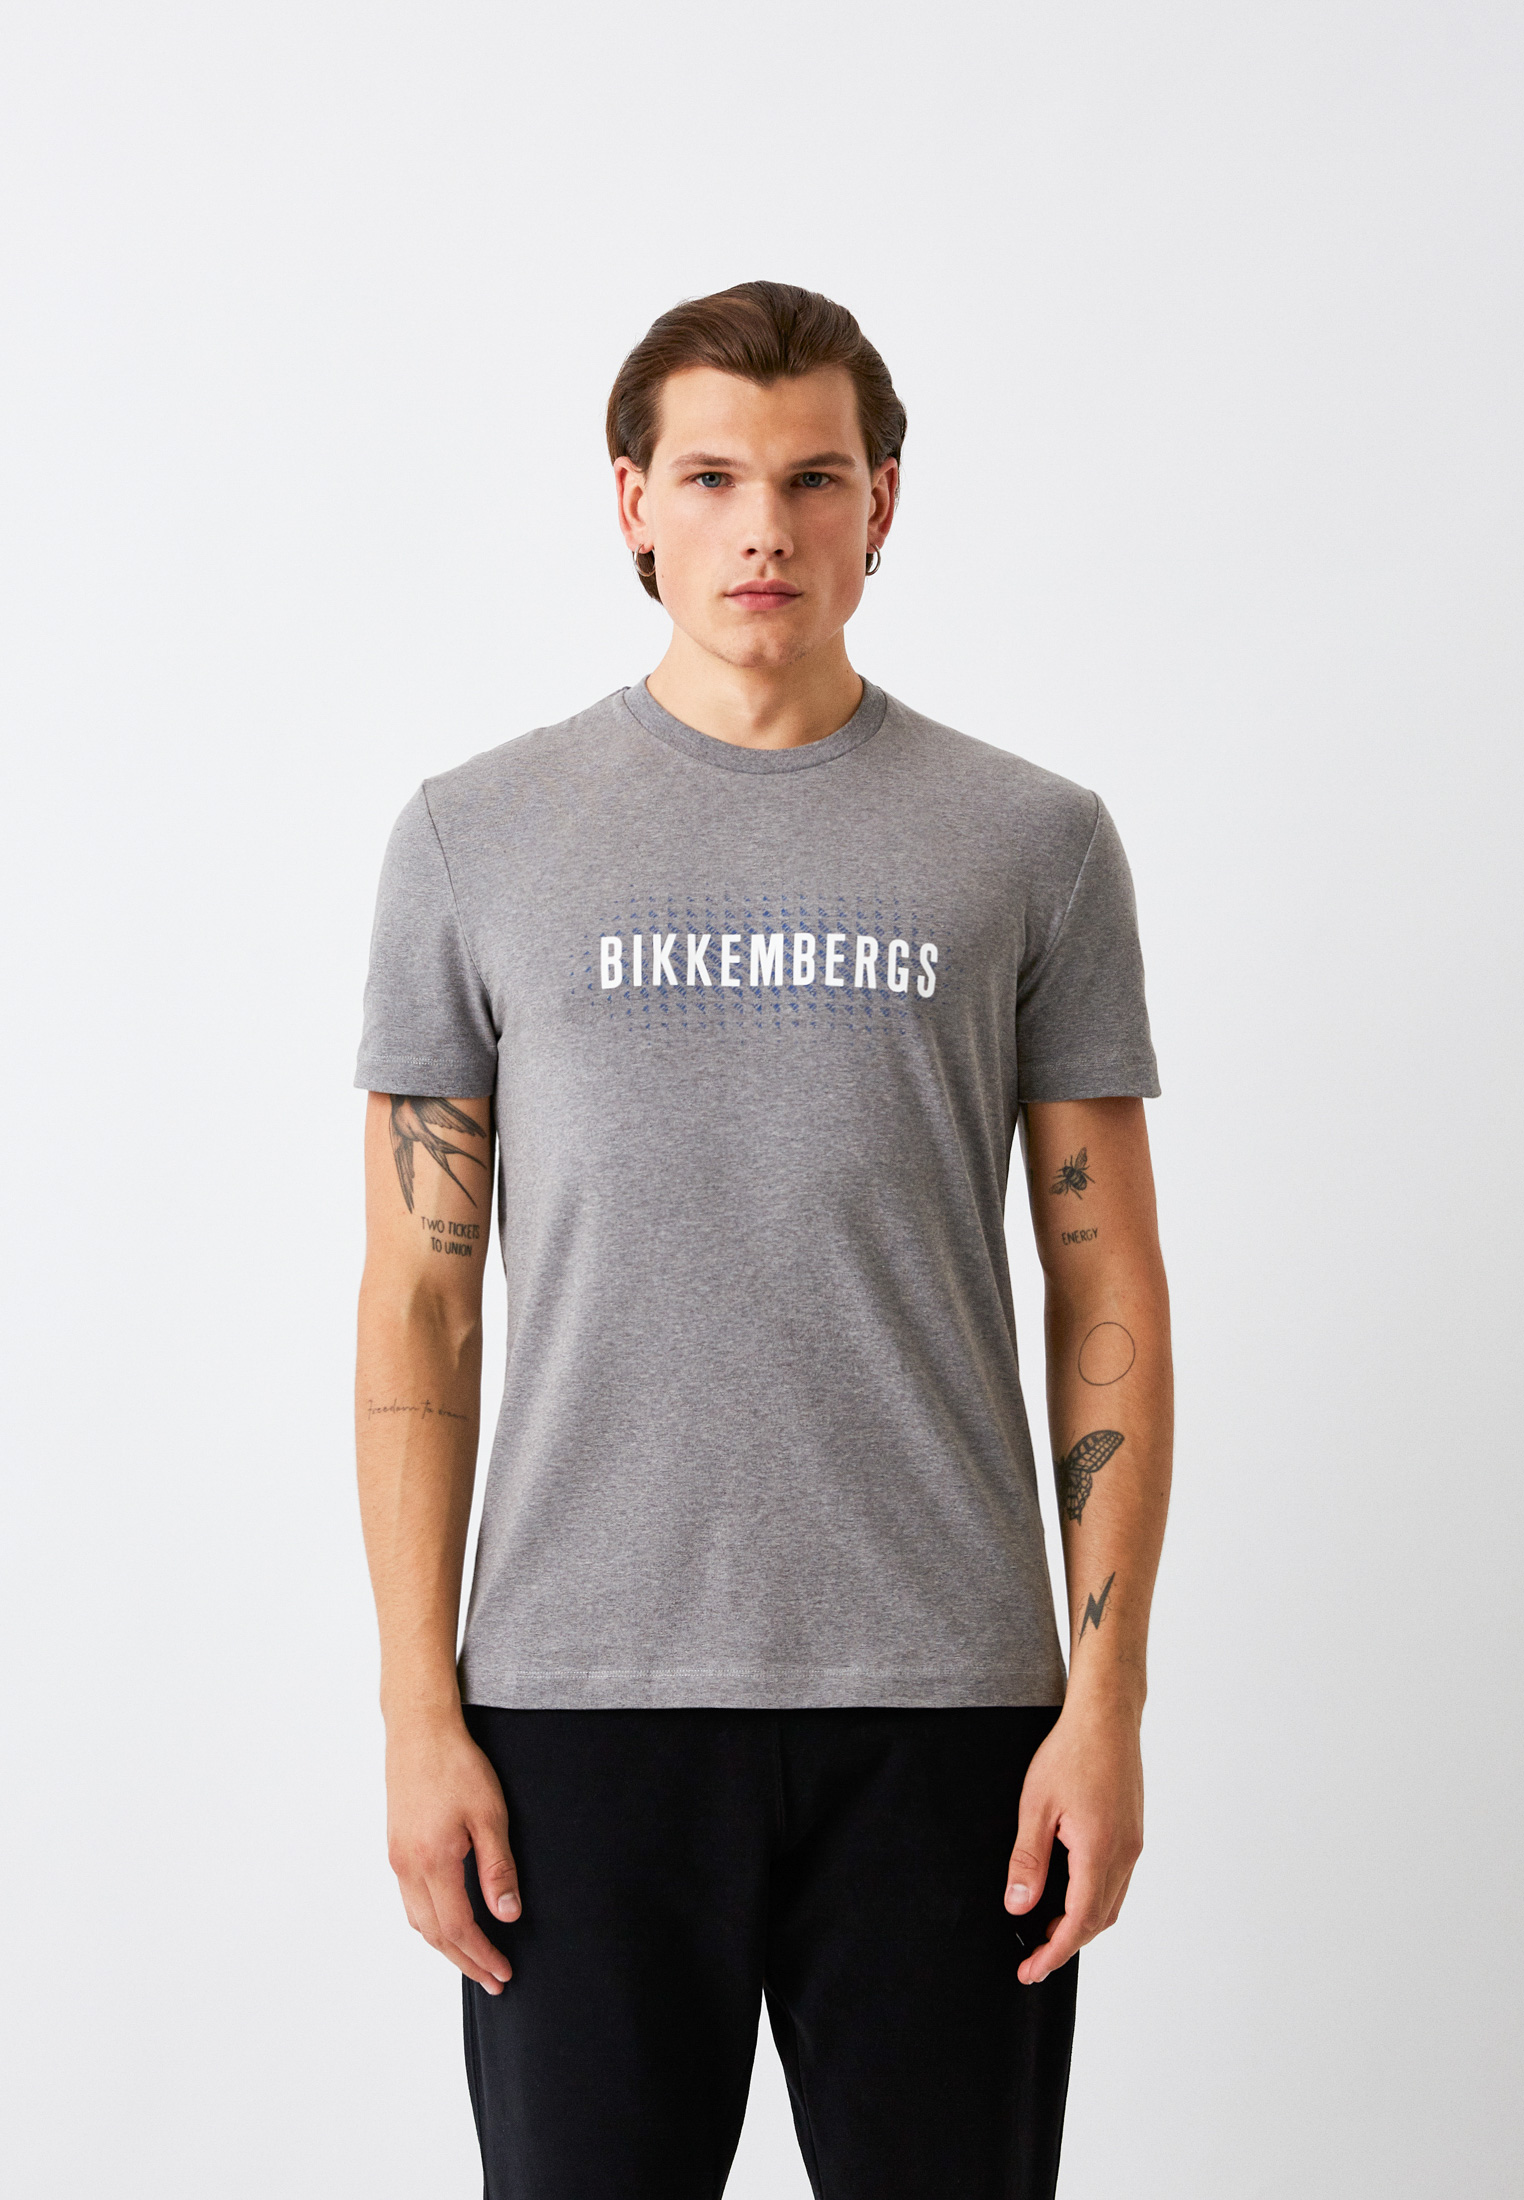 Мужская футболка Bikkembergs (Биккембергс) C 4 101 49 E 2296